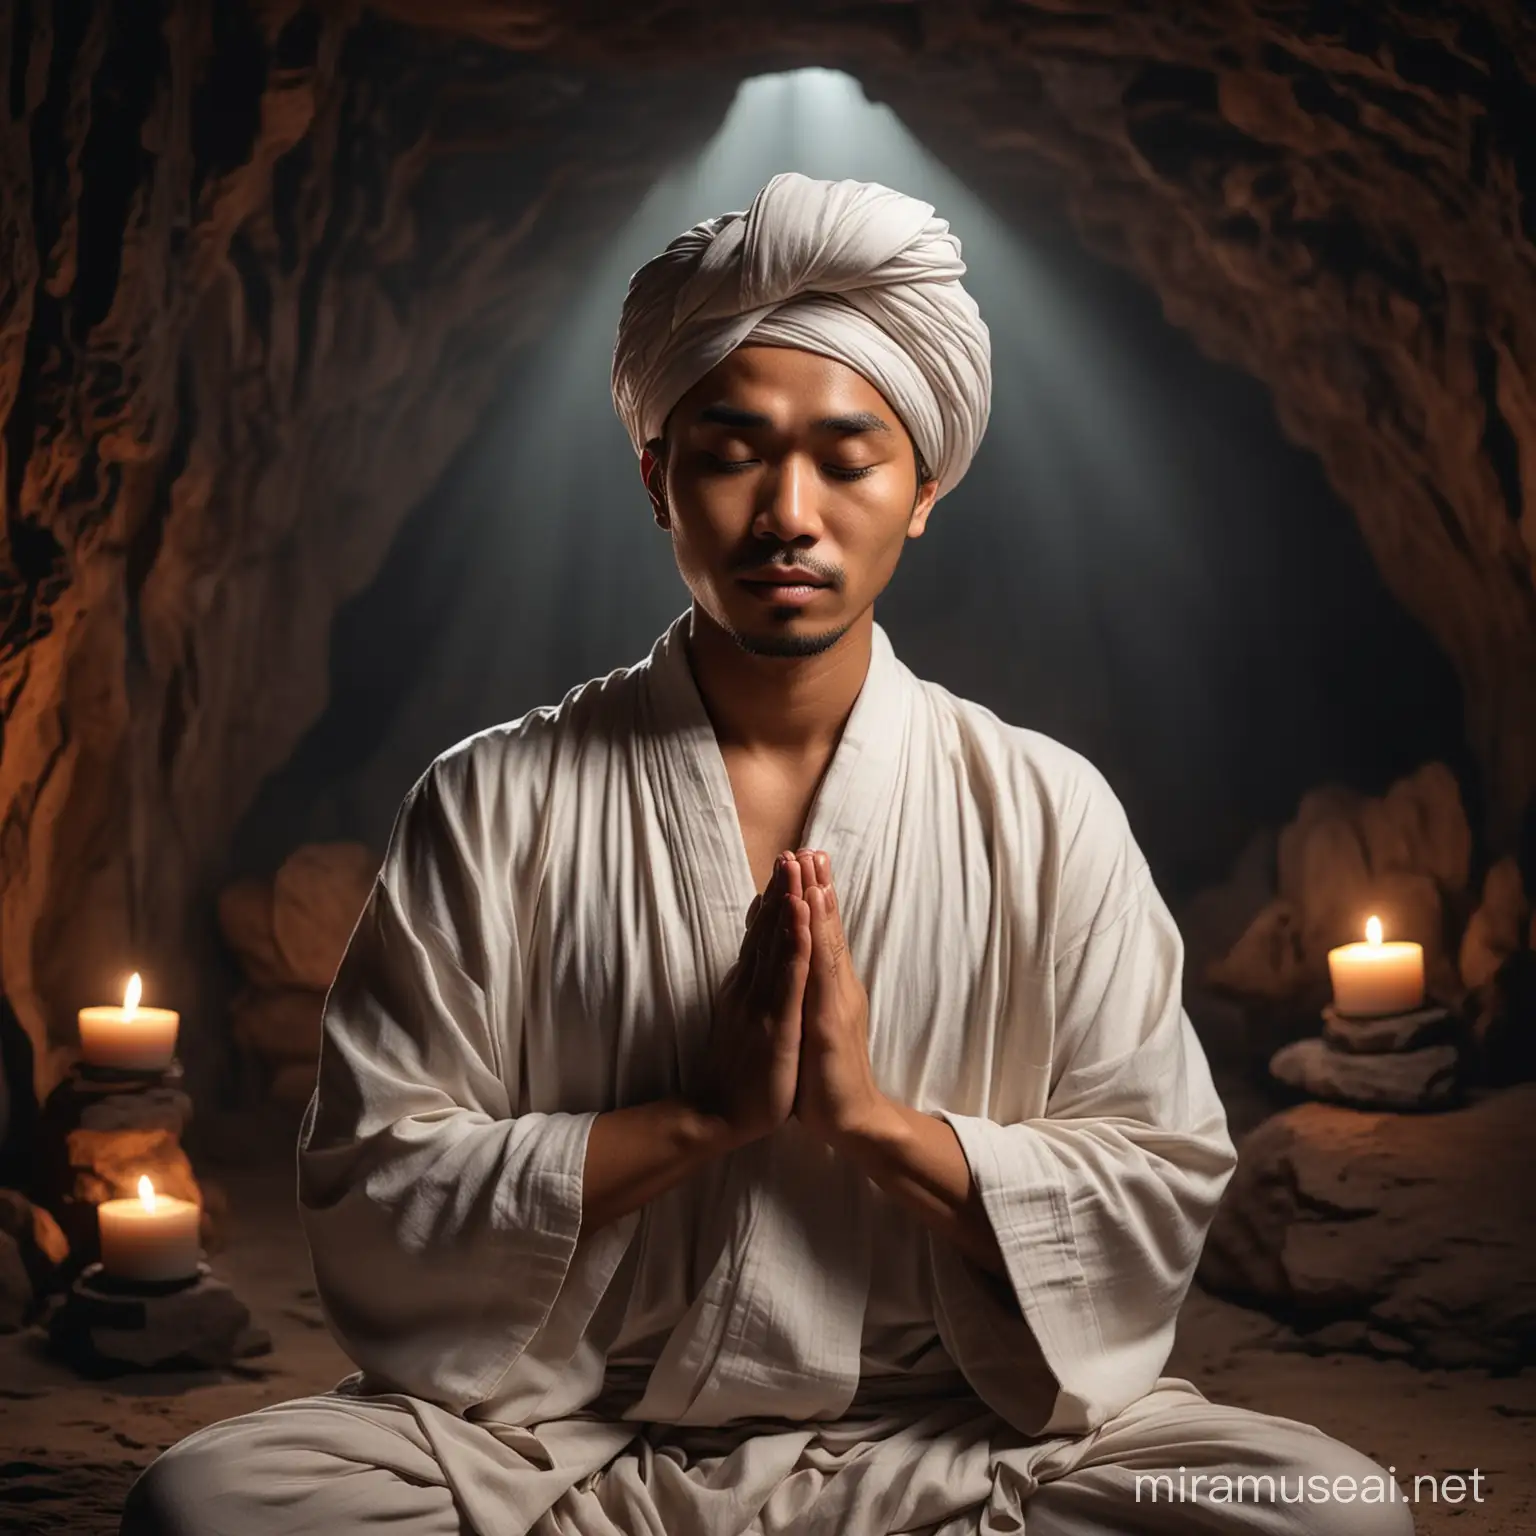 Serene Meditation Handsome Indonesian Man in Turban Meditating in Cave at Night